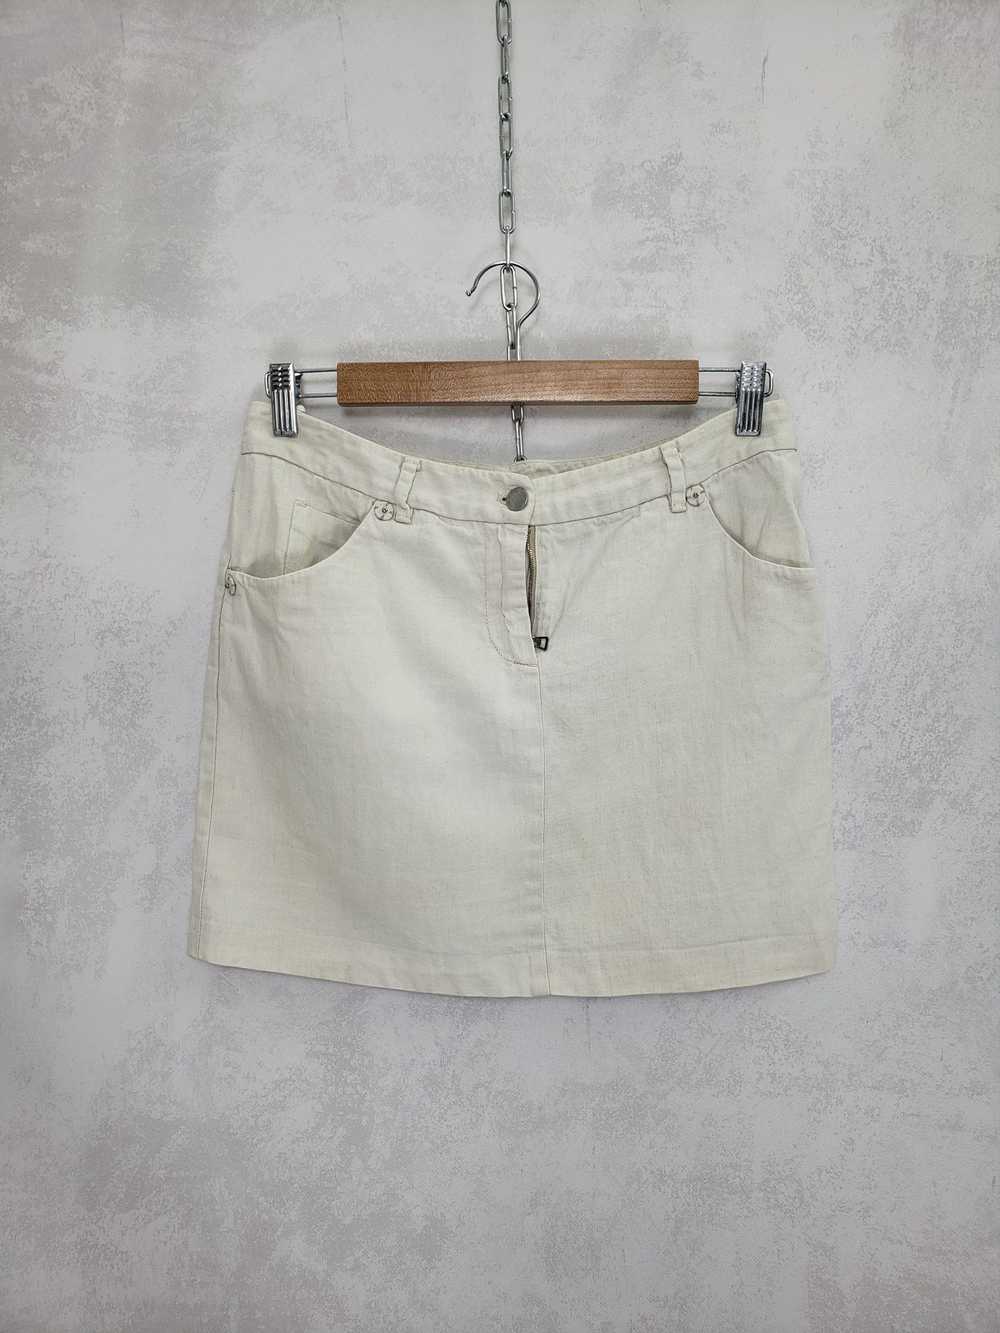 Prada × Vintage Prada jeans skirt red tab - image 1